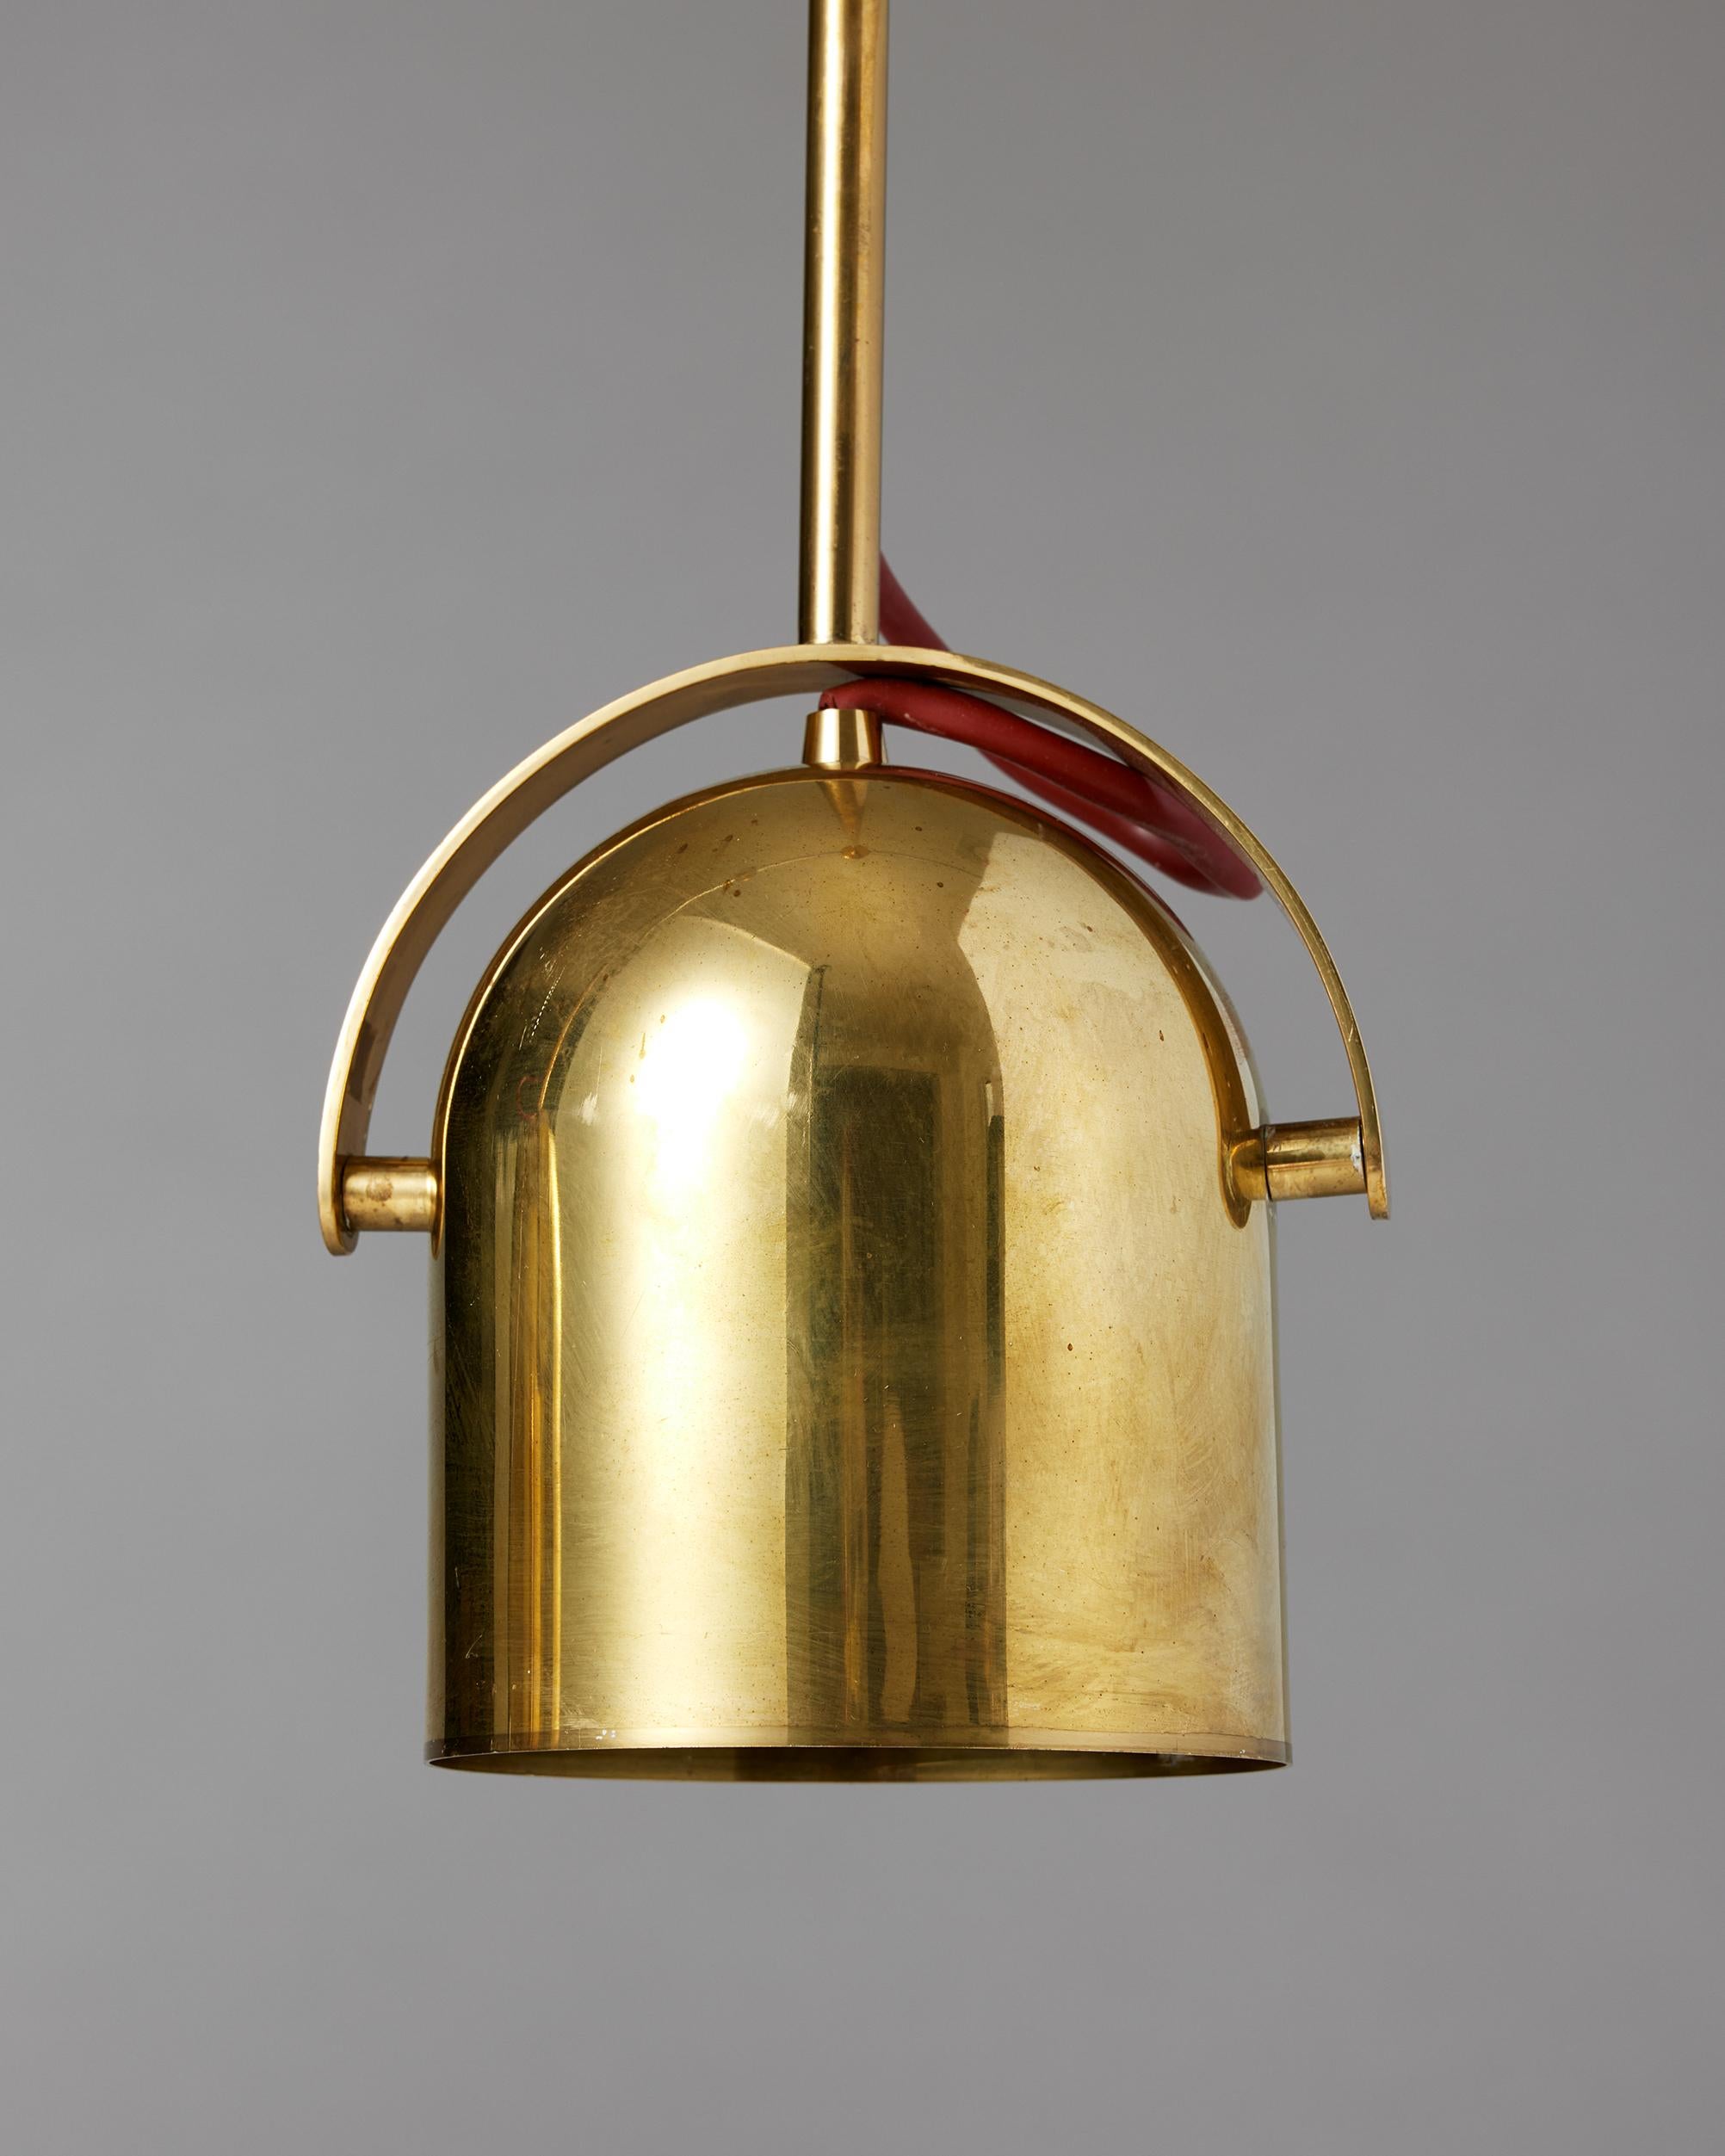 Ceiling lamp, model A203, designed by Alvar Aalto for Valaistustyö, Finland For Sale 2